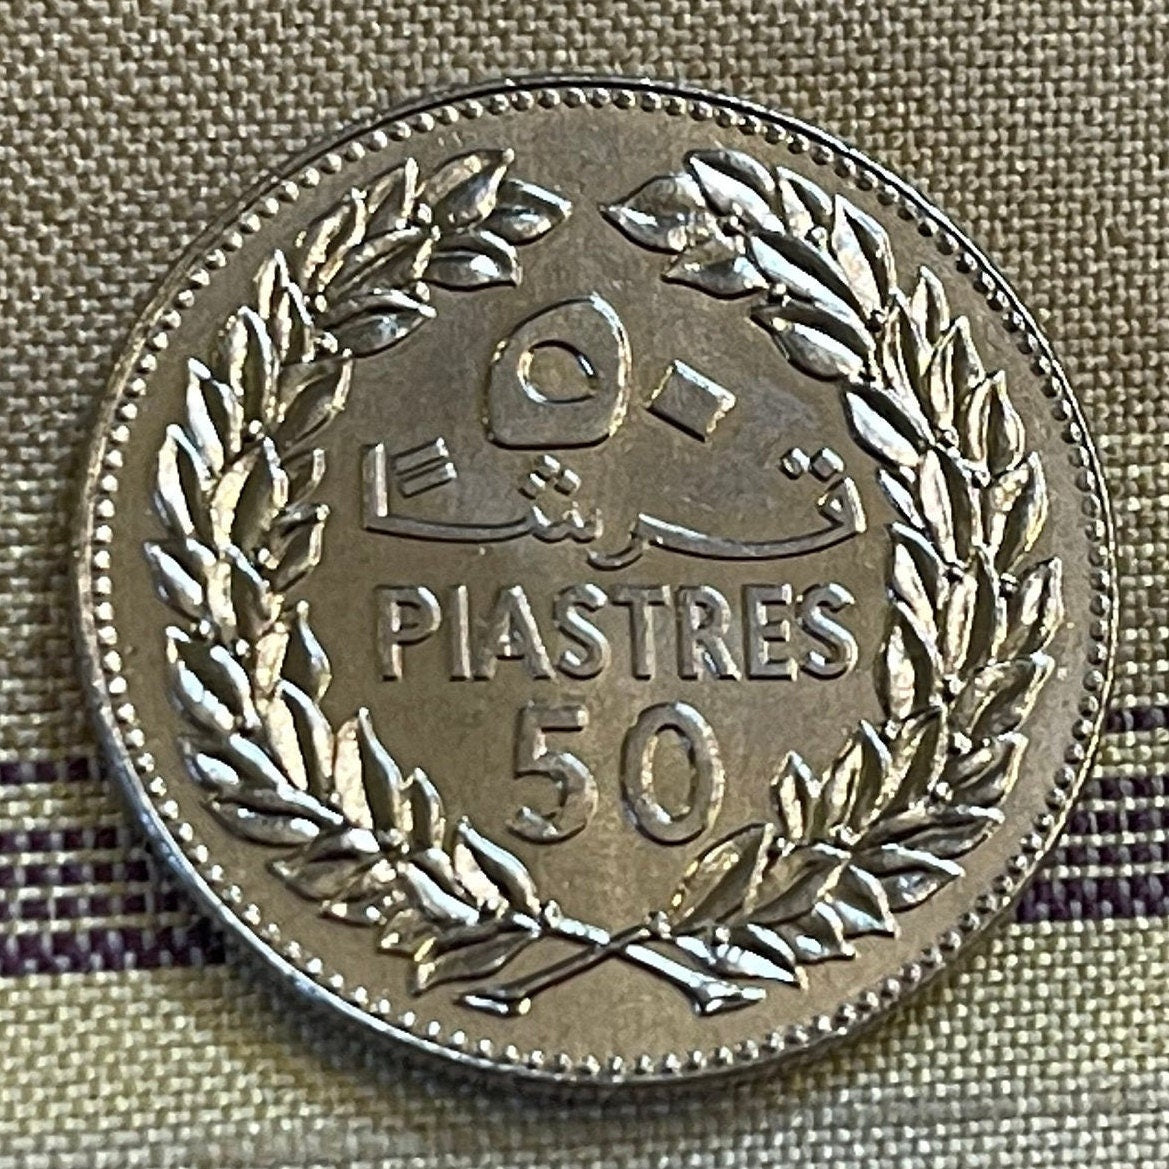 Cedar of Lebanon 50 Piastres Lebanon Authentic Coin Money for Jewelry and Craft Making (50 Qirsha) (Gilgamesh) 1980